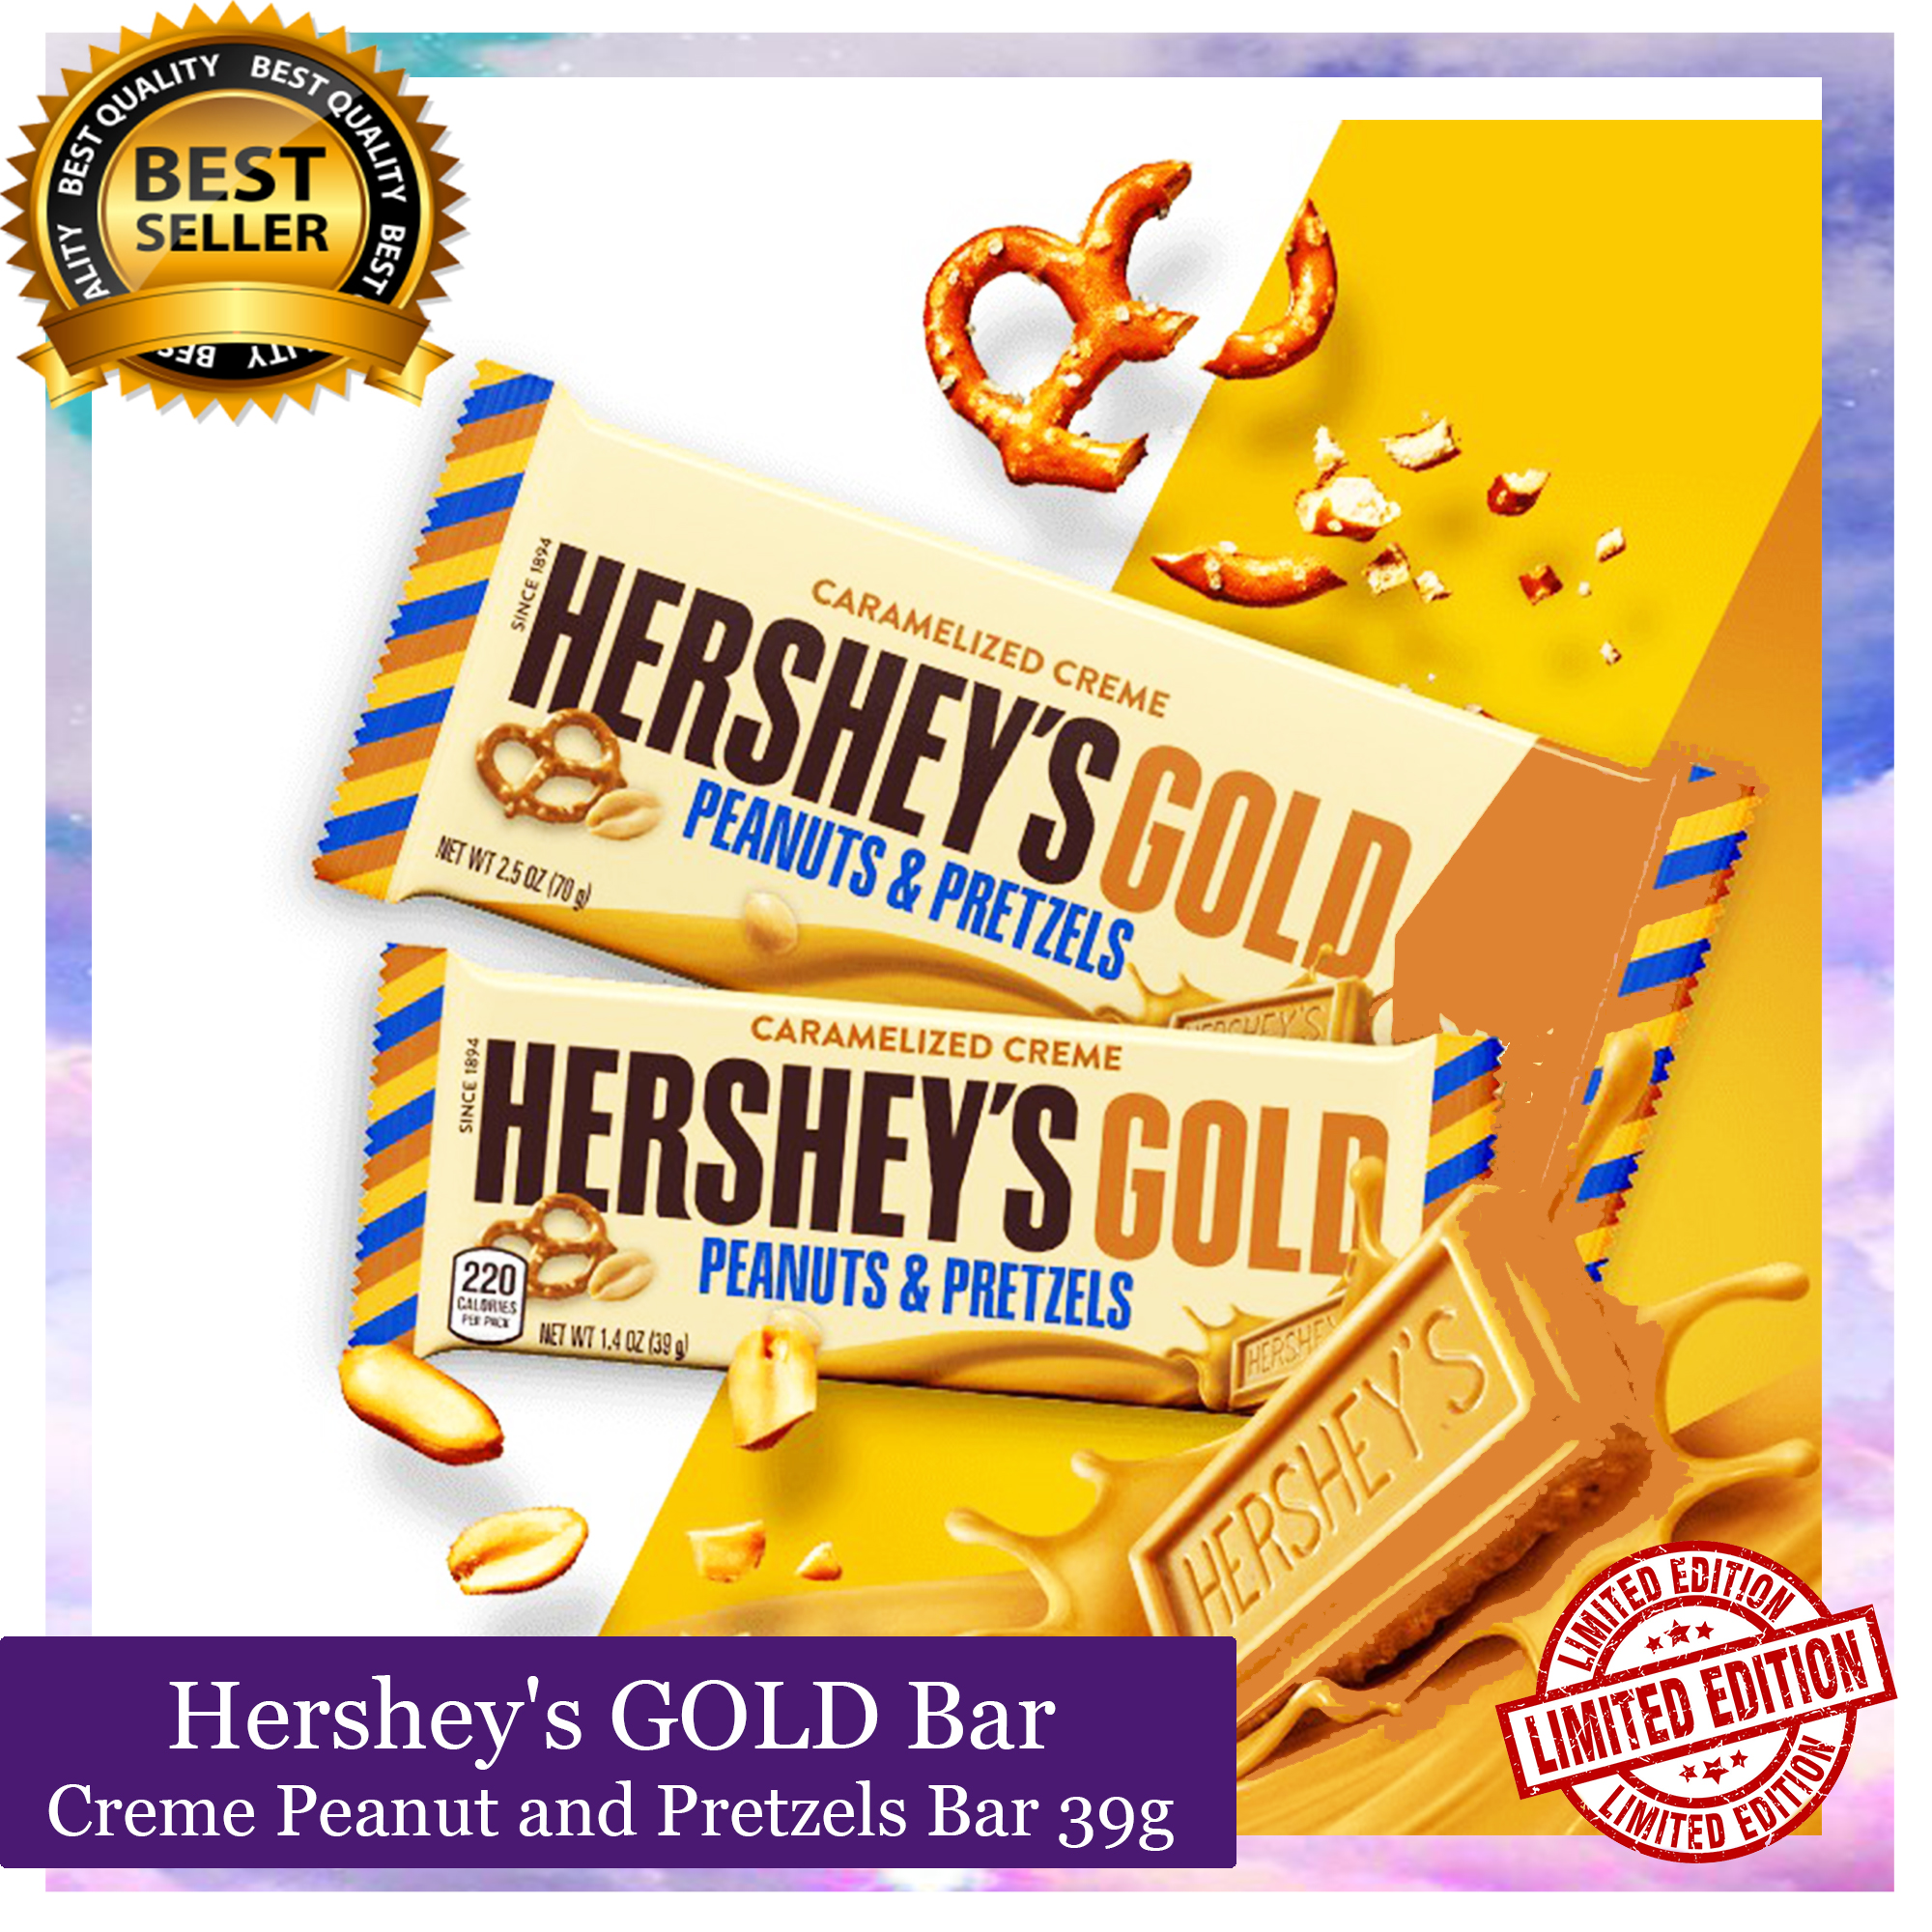 Hershey's Gold, Peanuts and Pretzels Candy Bar, 1.4 Oz 